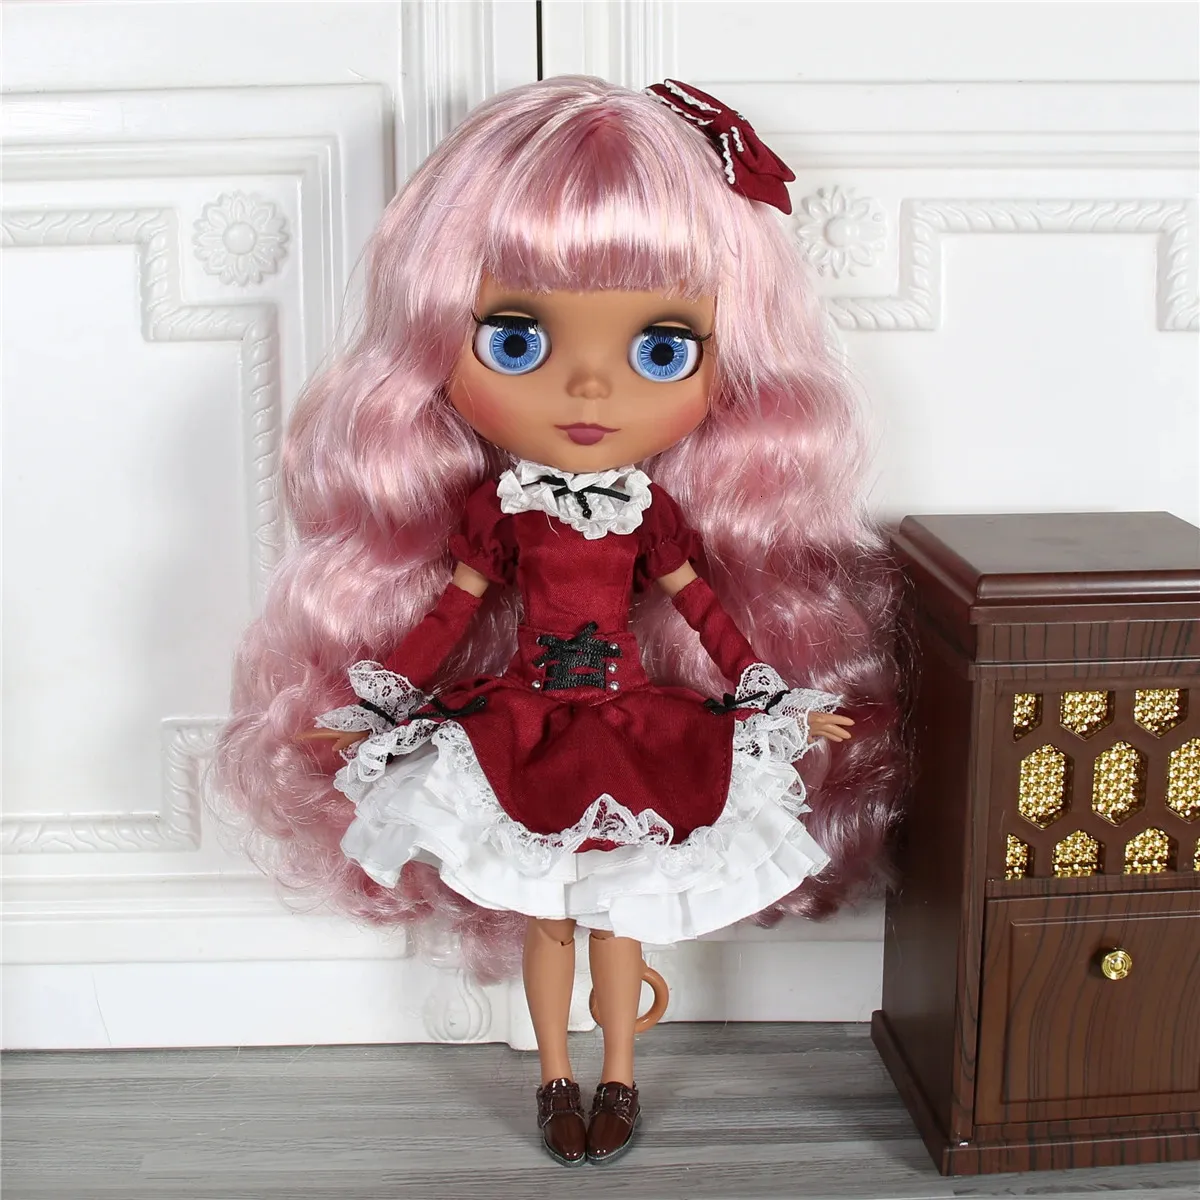 ICY DBS Blyth Doll 16 bjd joint body donkere huid mat gezicht paars mix roze haar speelgoed 30 cm meisjes cadeau 240311